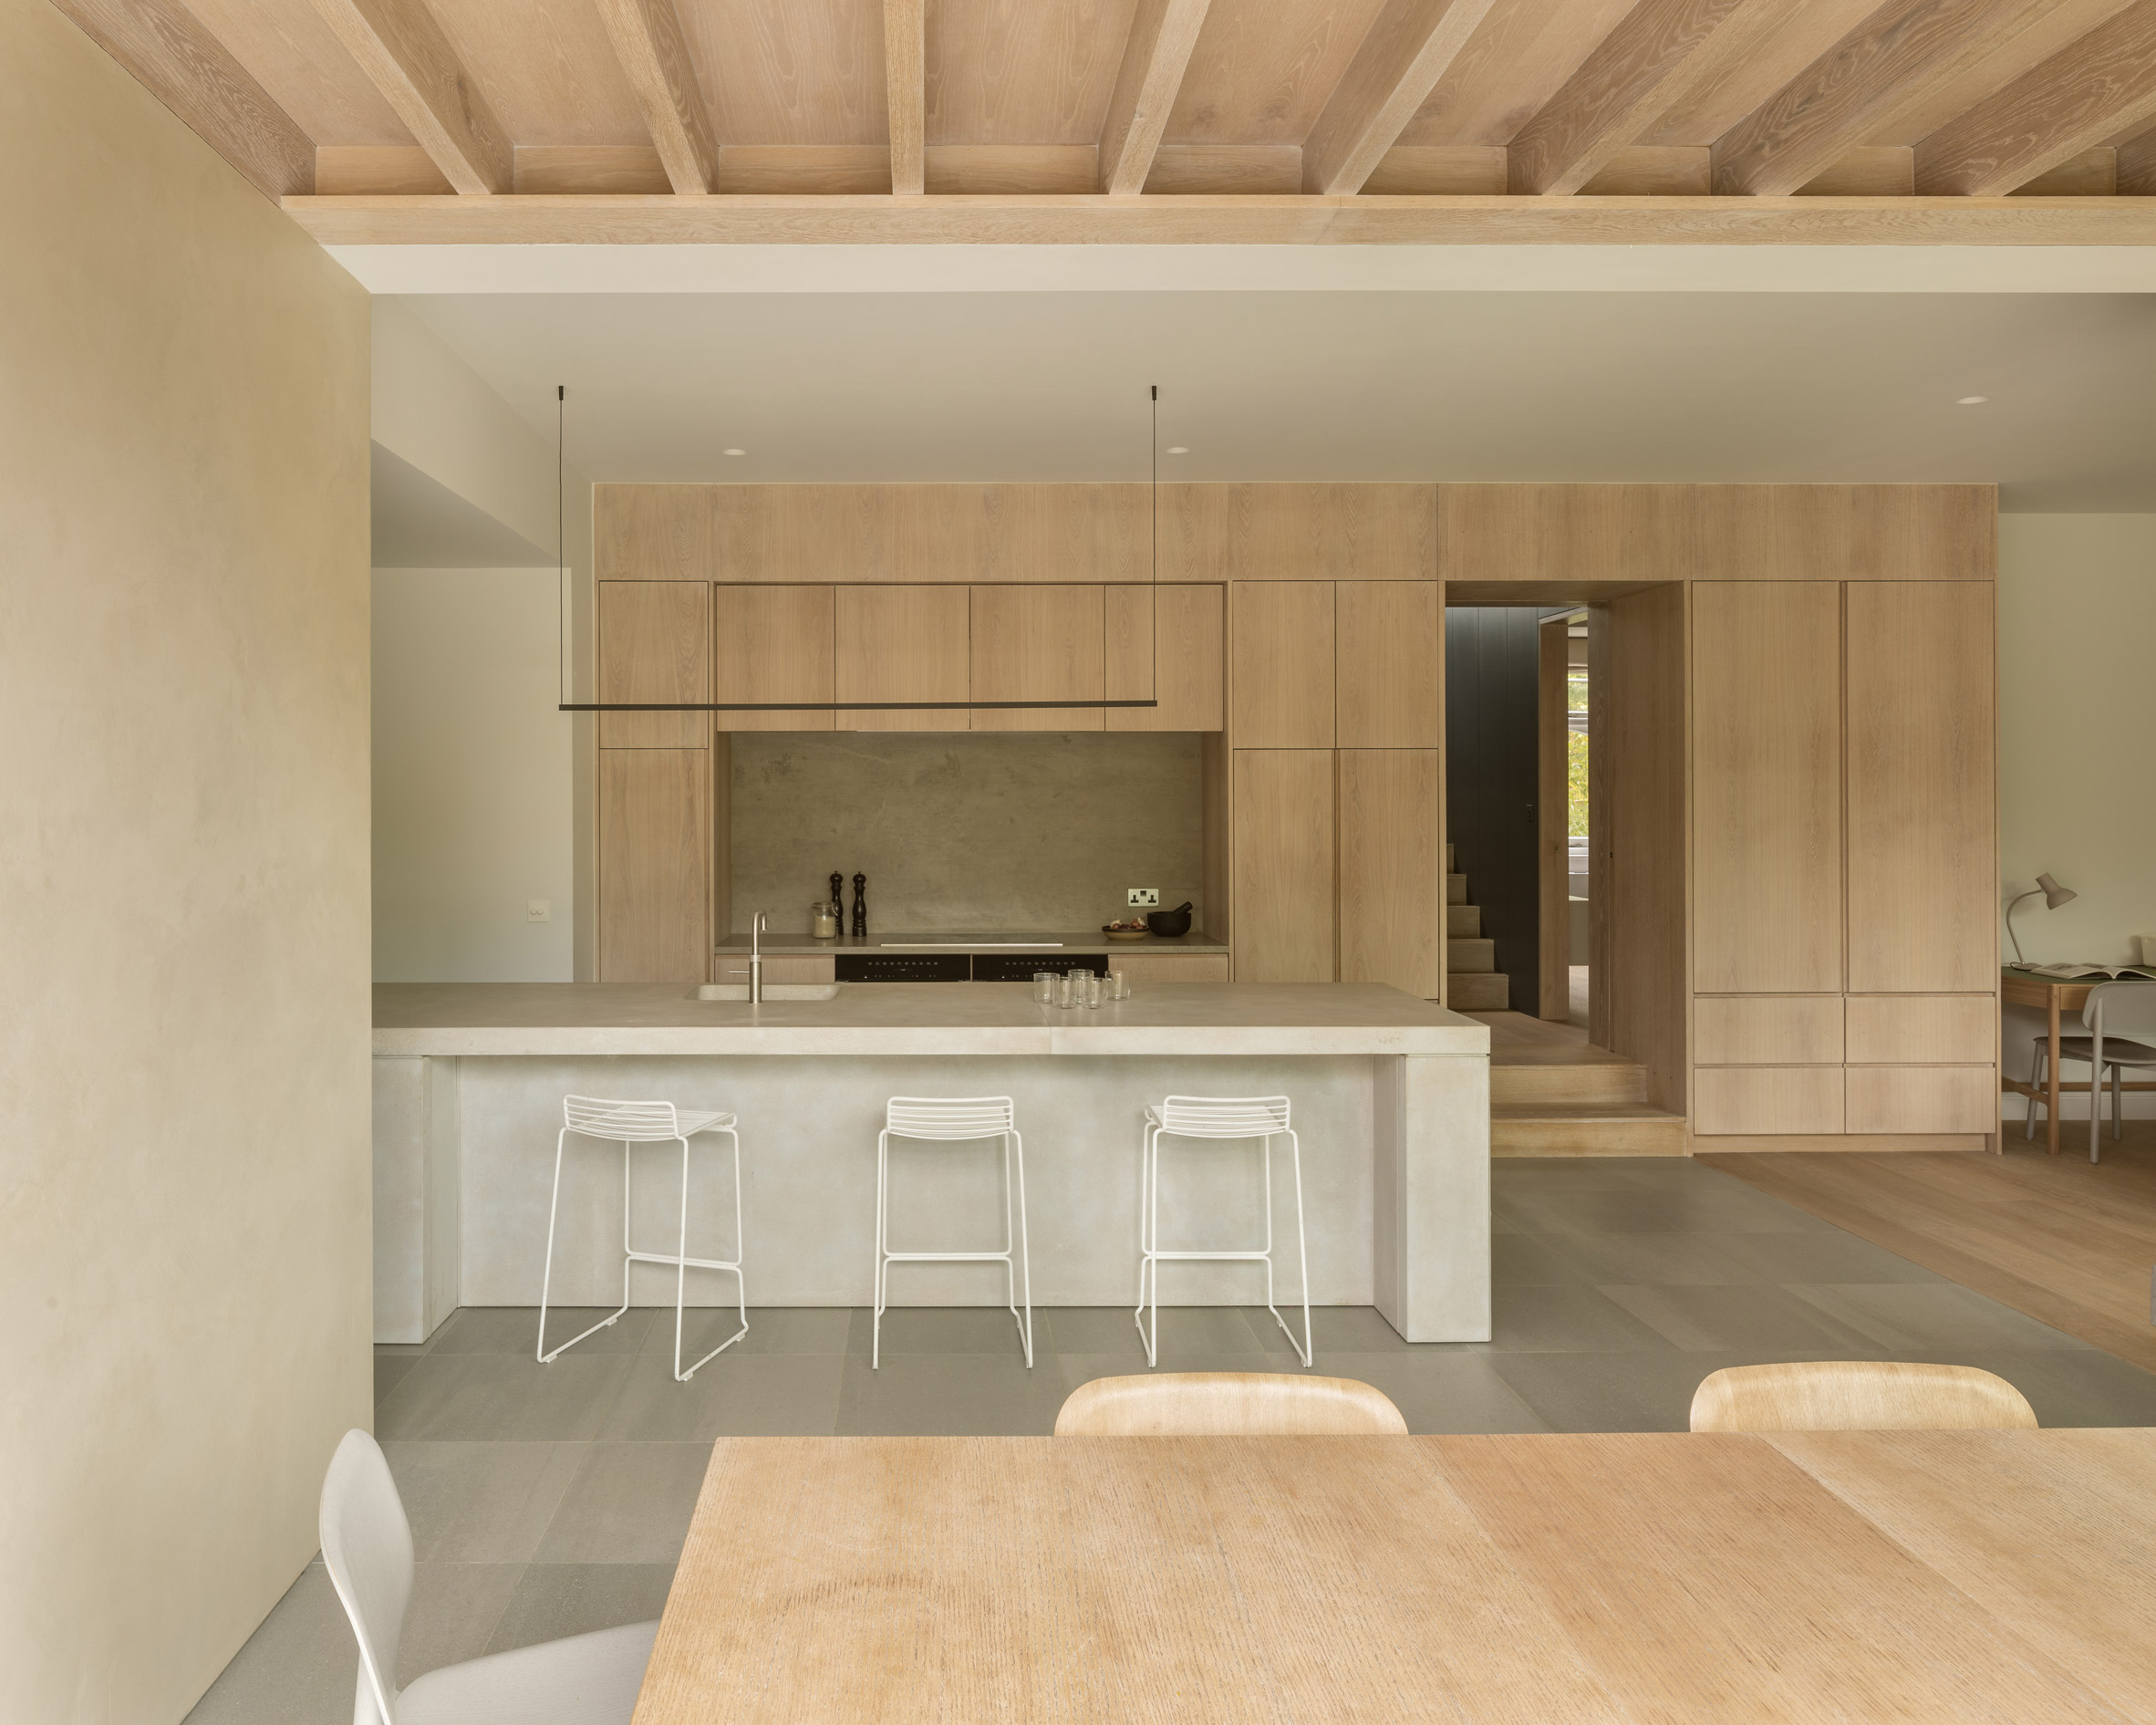 Wooden kitchen with concrete island